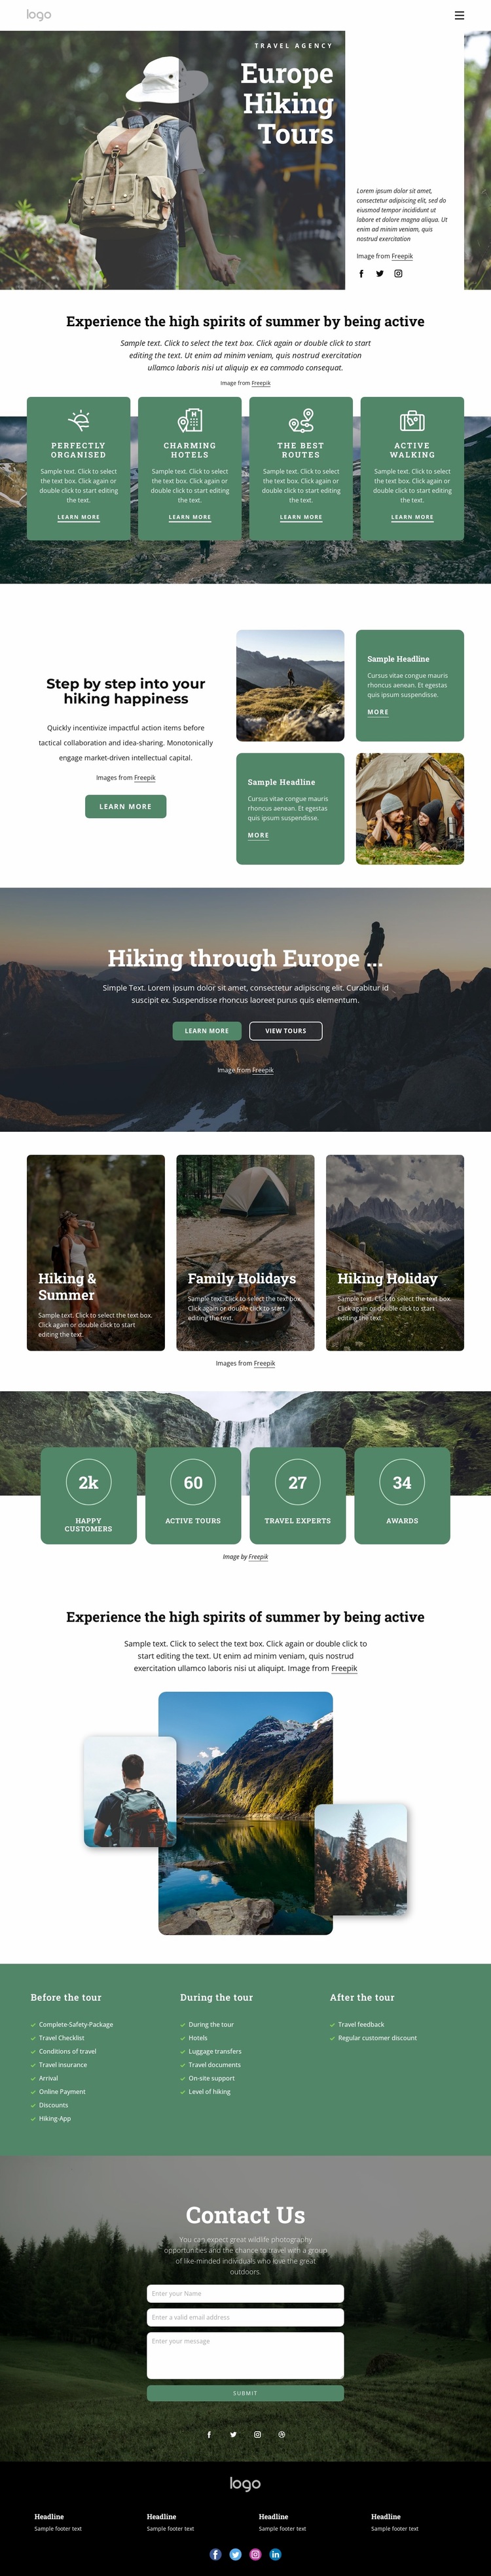 Hiking & trekking tours in Europe Website Design